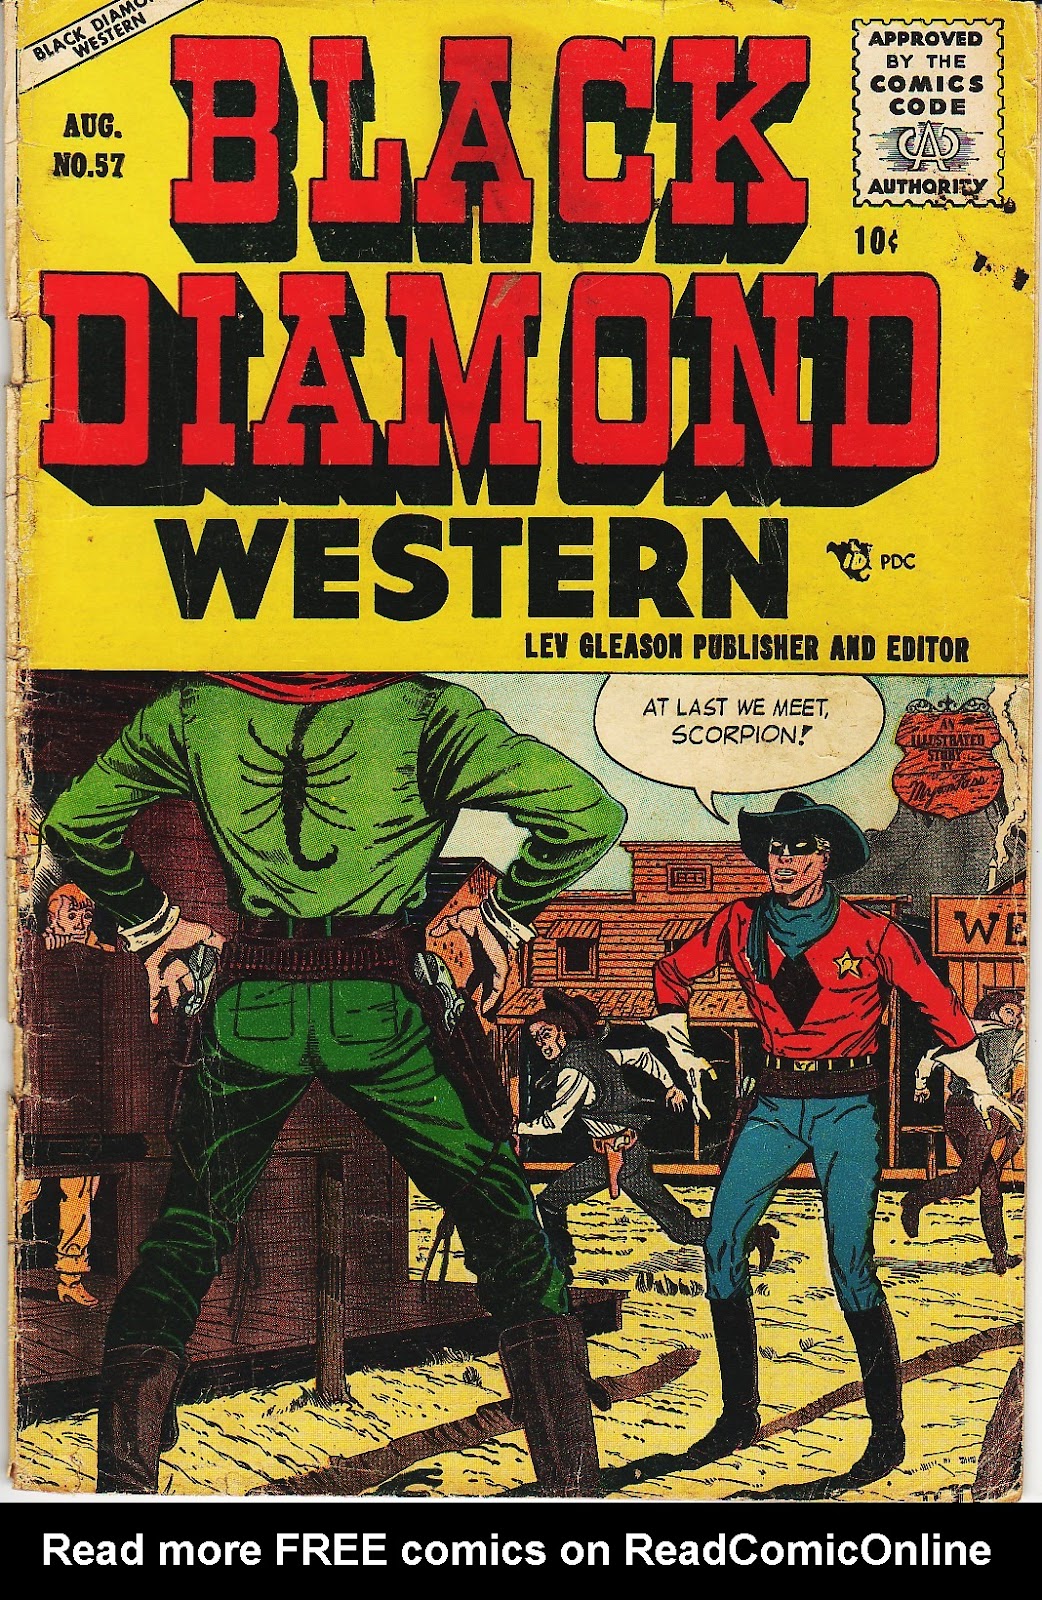 Black Diamond Western issue 57 - Page 1